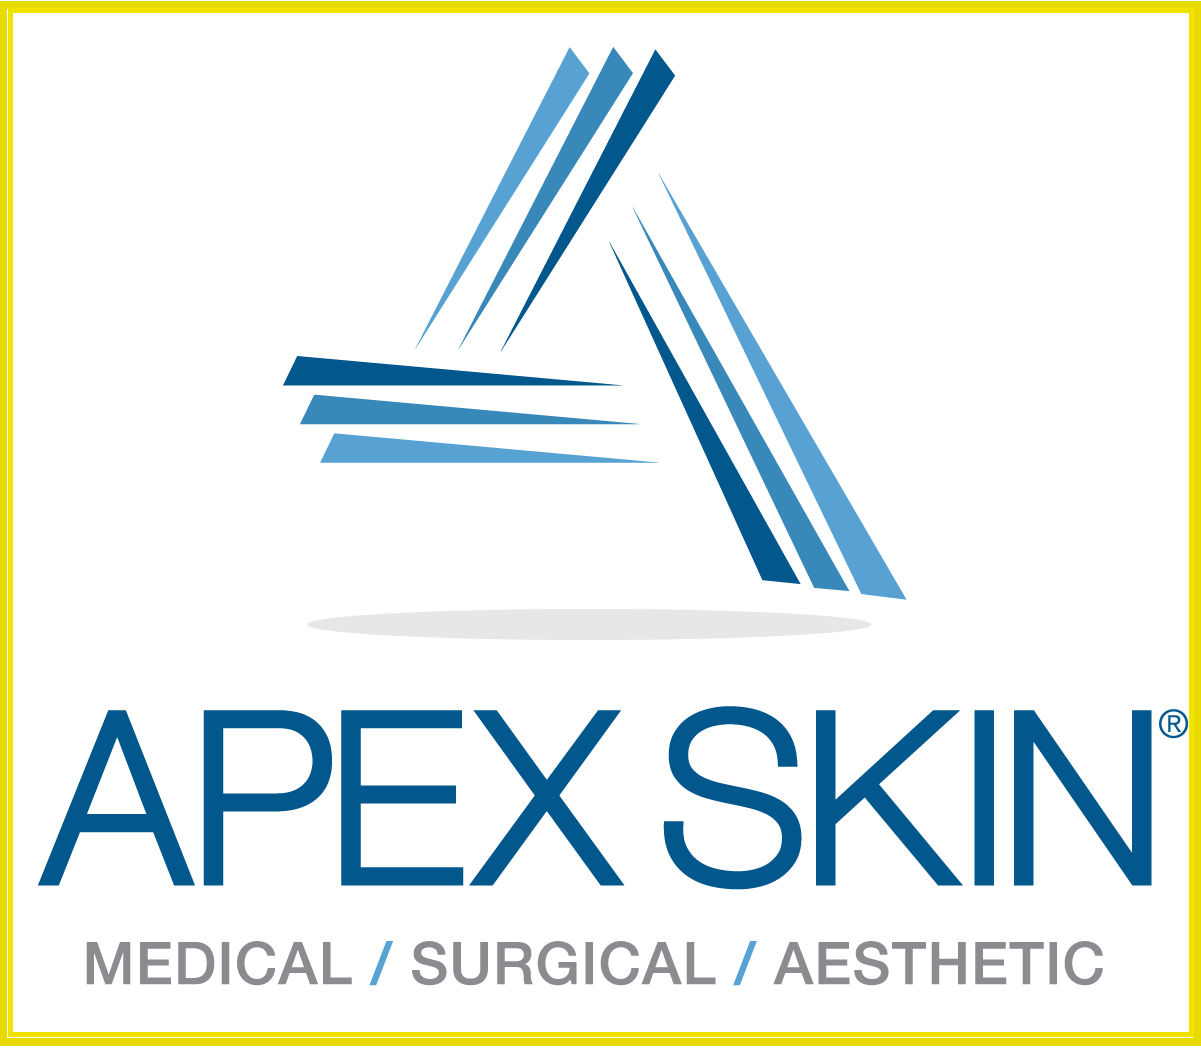 Apex Skin